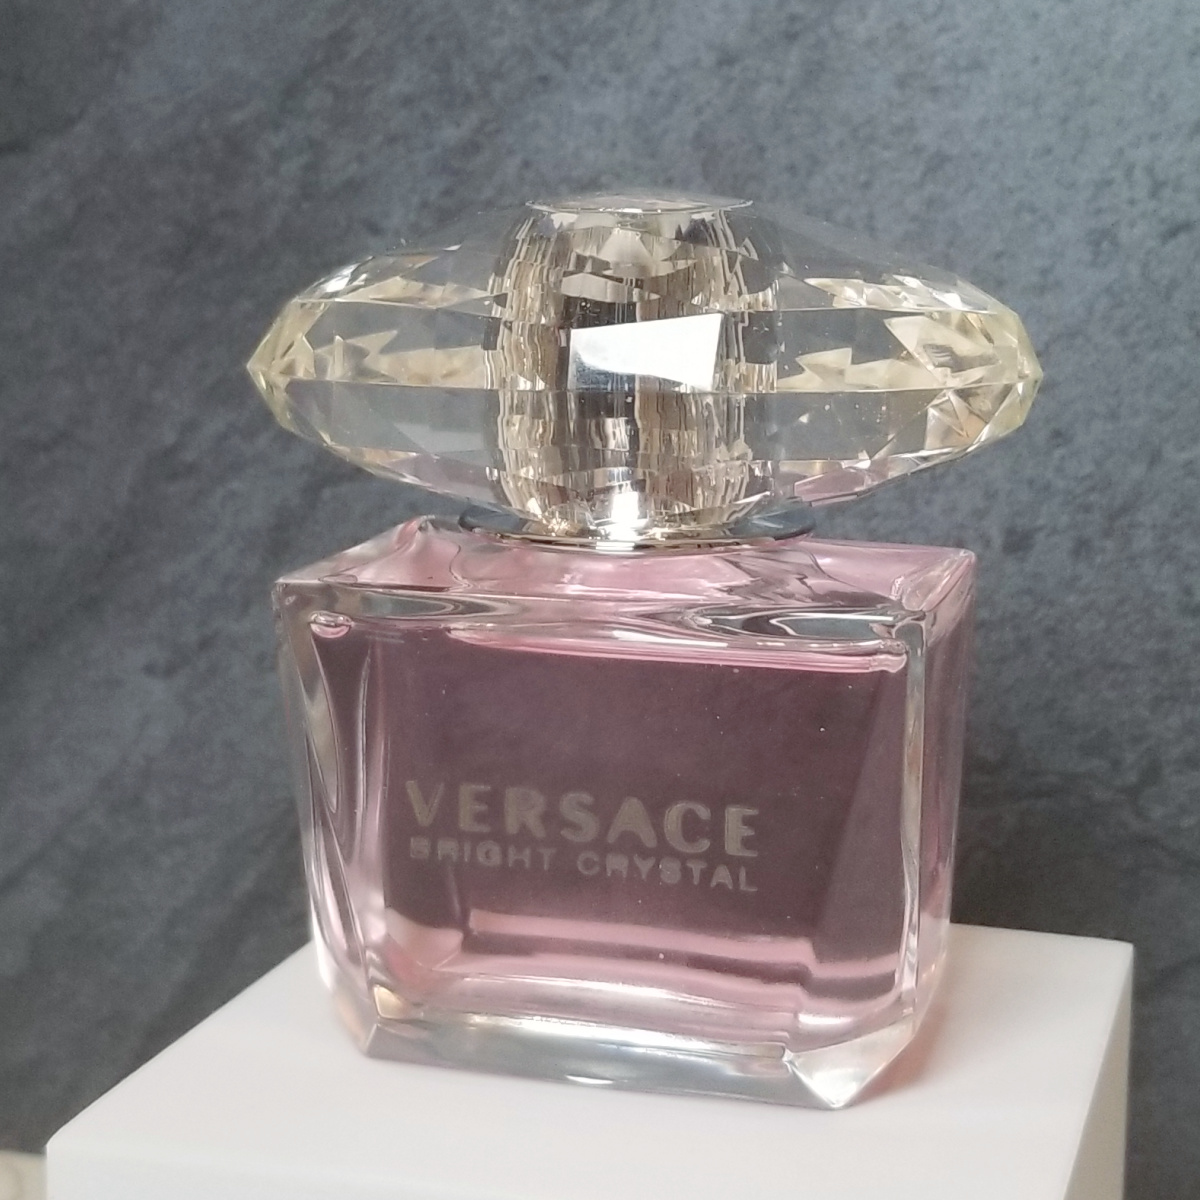 versace bright crystal perfume bottle sq